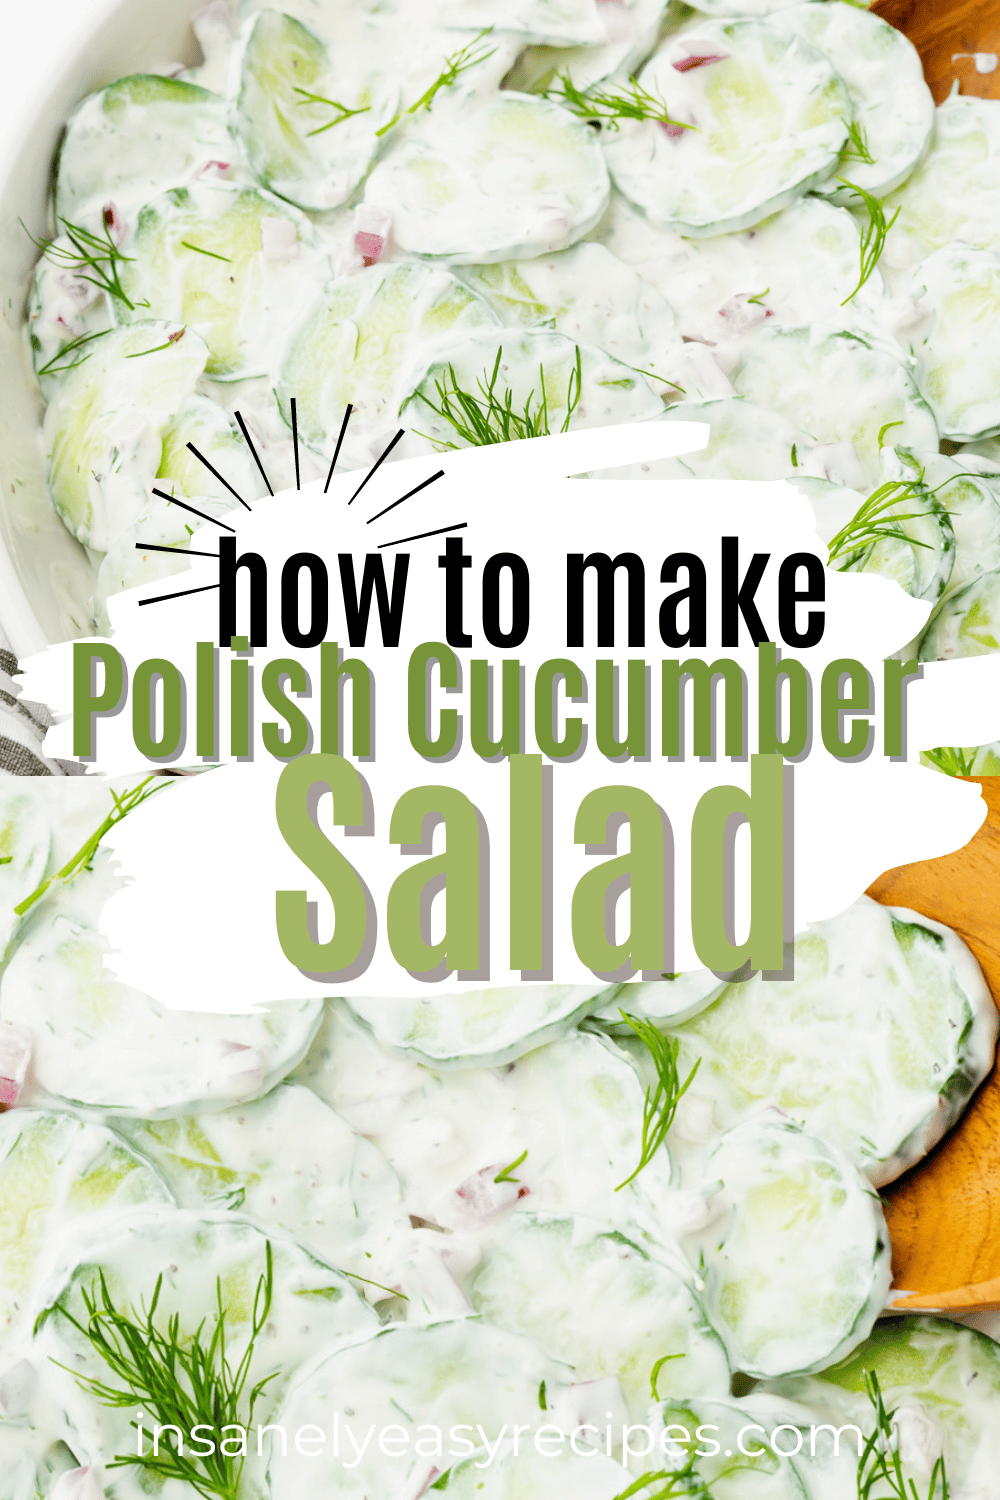 Closeup view of creamy polish cucumber salad with sour cream. Text overlay says "how to make polish cucumber salad"